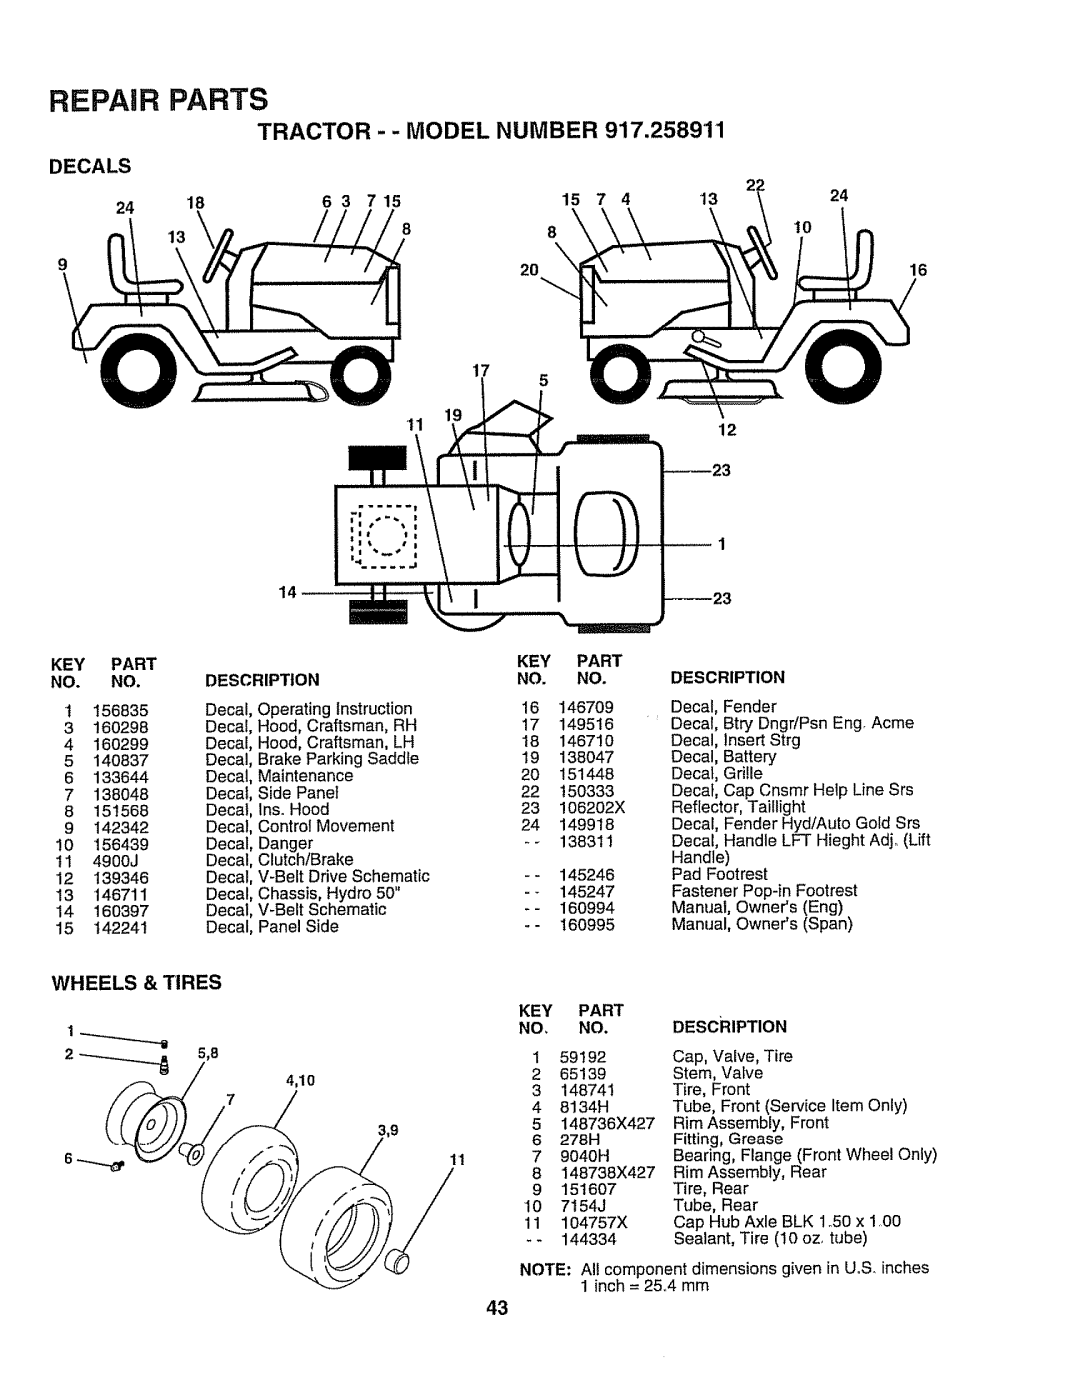 Craftsman 917.258911 owner manual Wheels & Tires, Decals, 1324, Repair Parts, Tractor - - Model Number, Description 